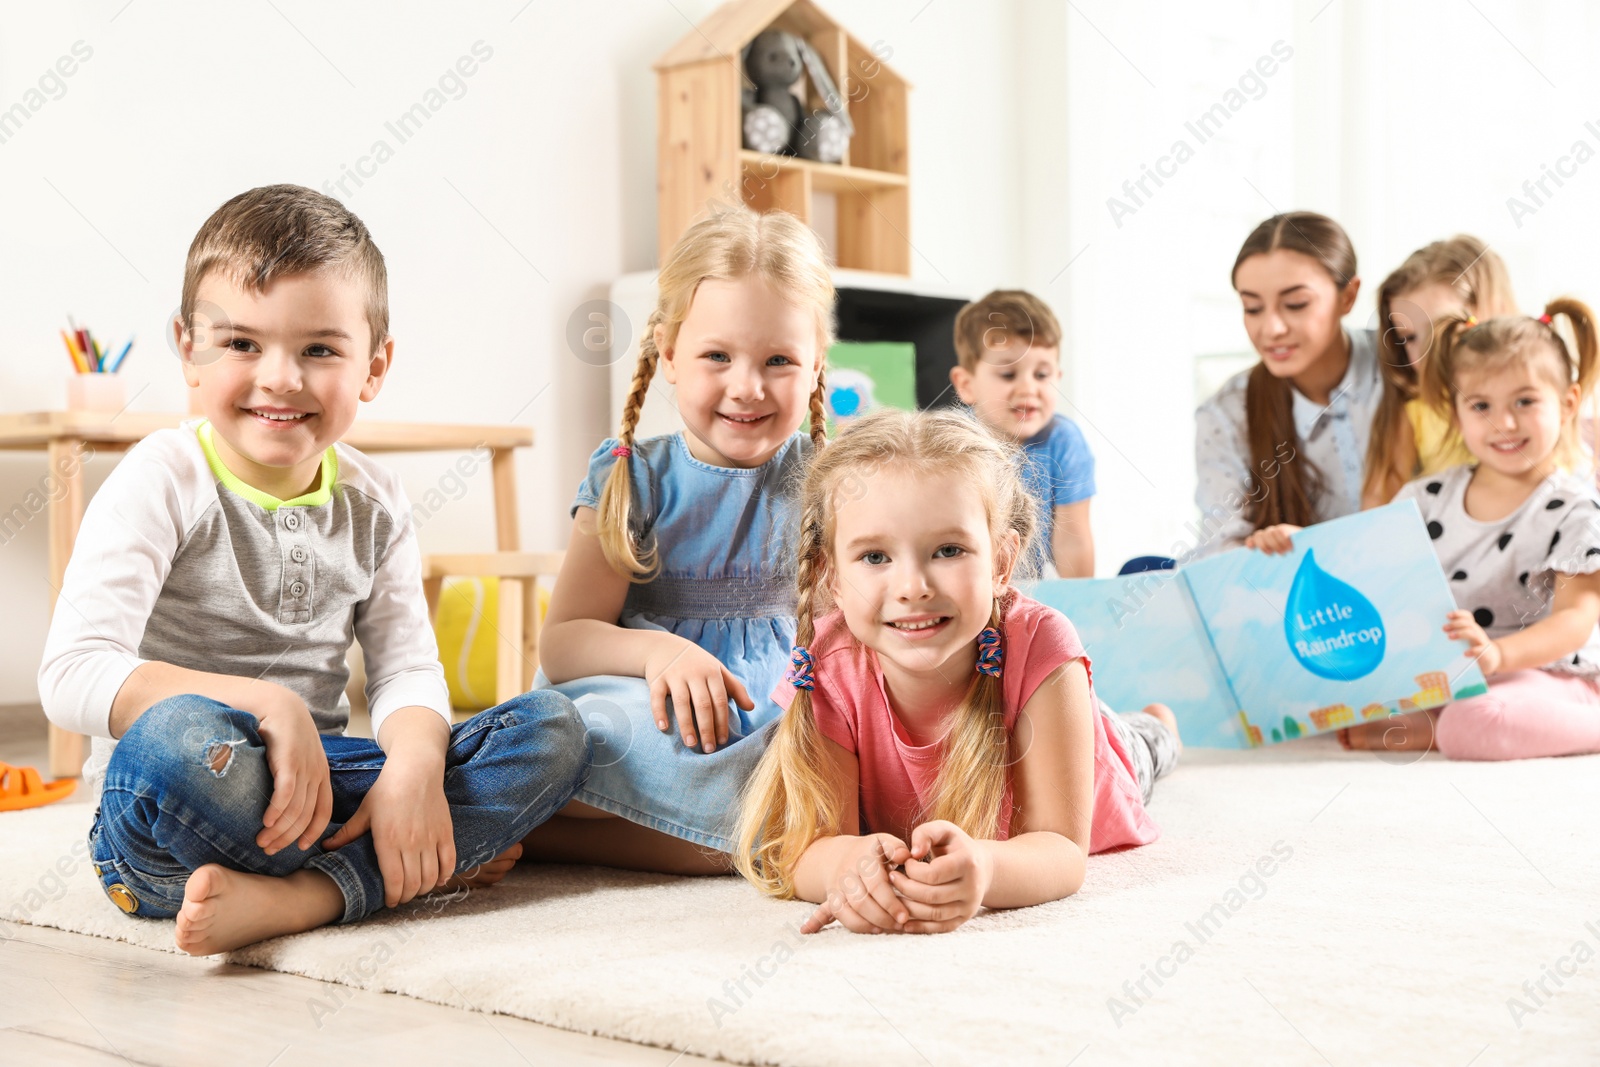 Photo of Playful little children resting on floor indoors